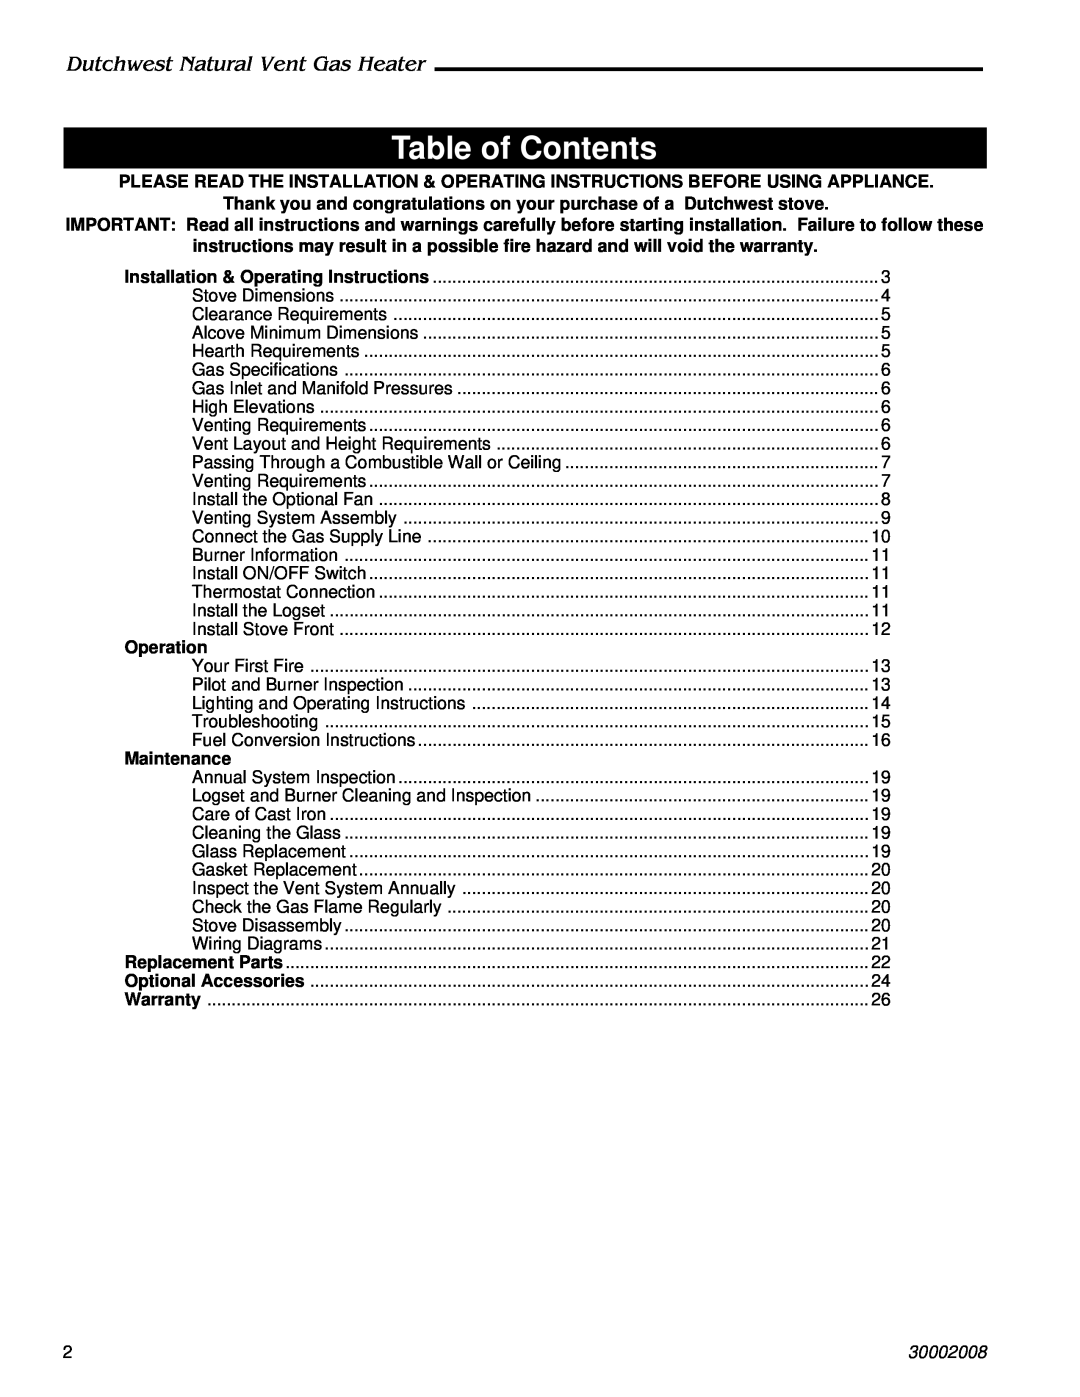 CFM Corporation 2467, 2468 manual Table of Contents, Dutchwest Natural Vent Gas Heater, 30002008 